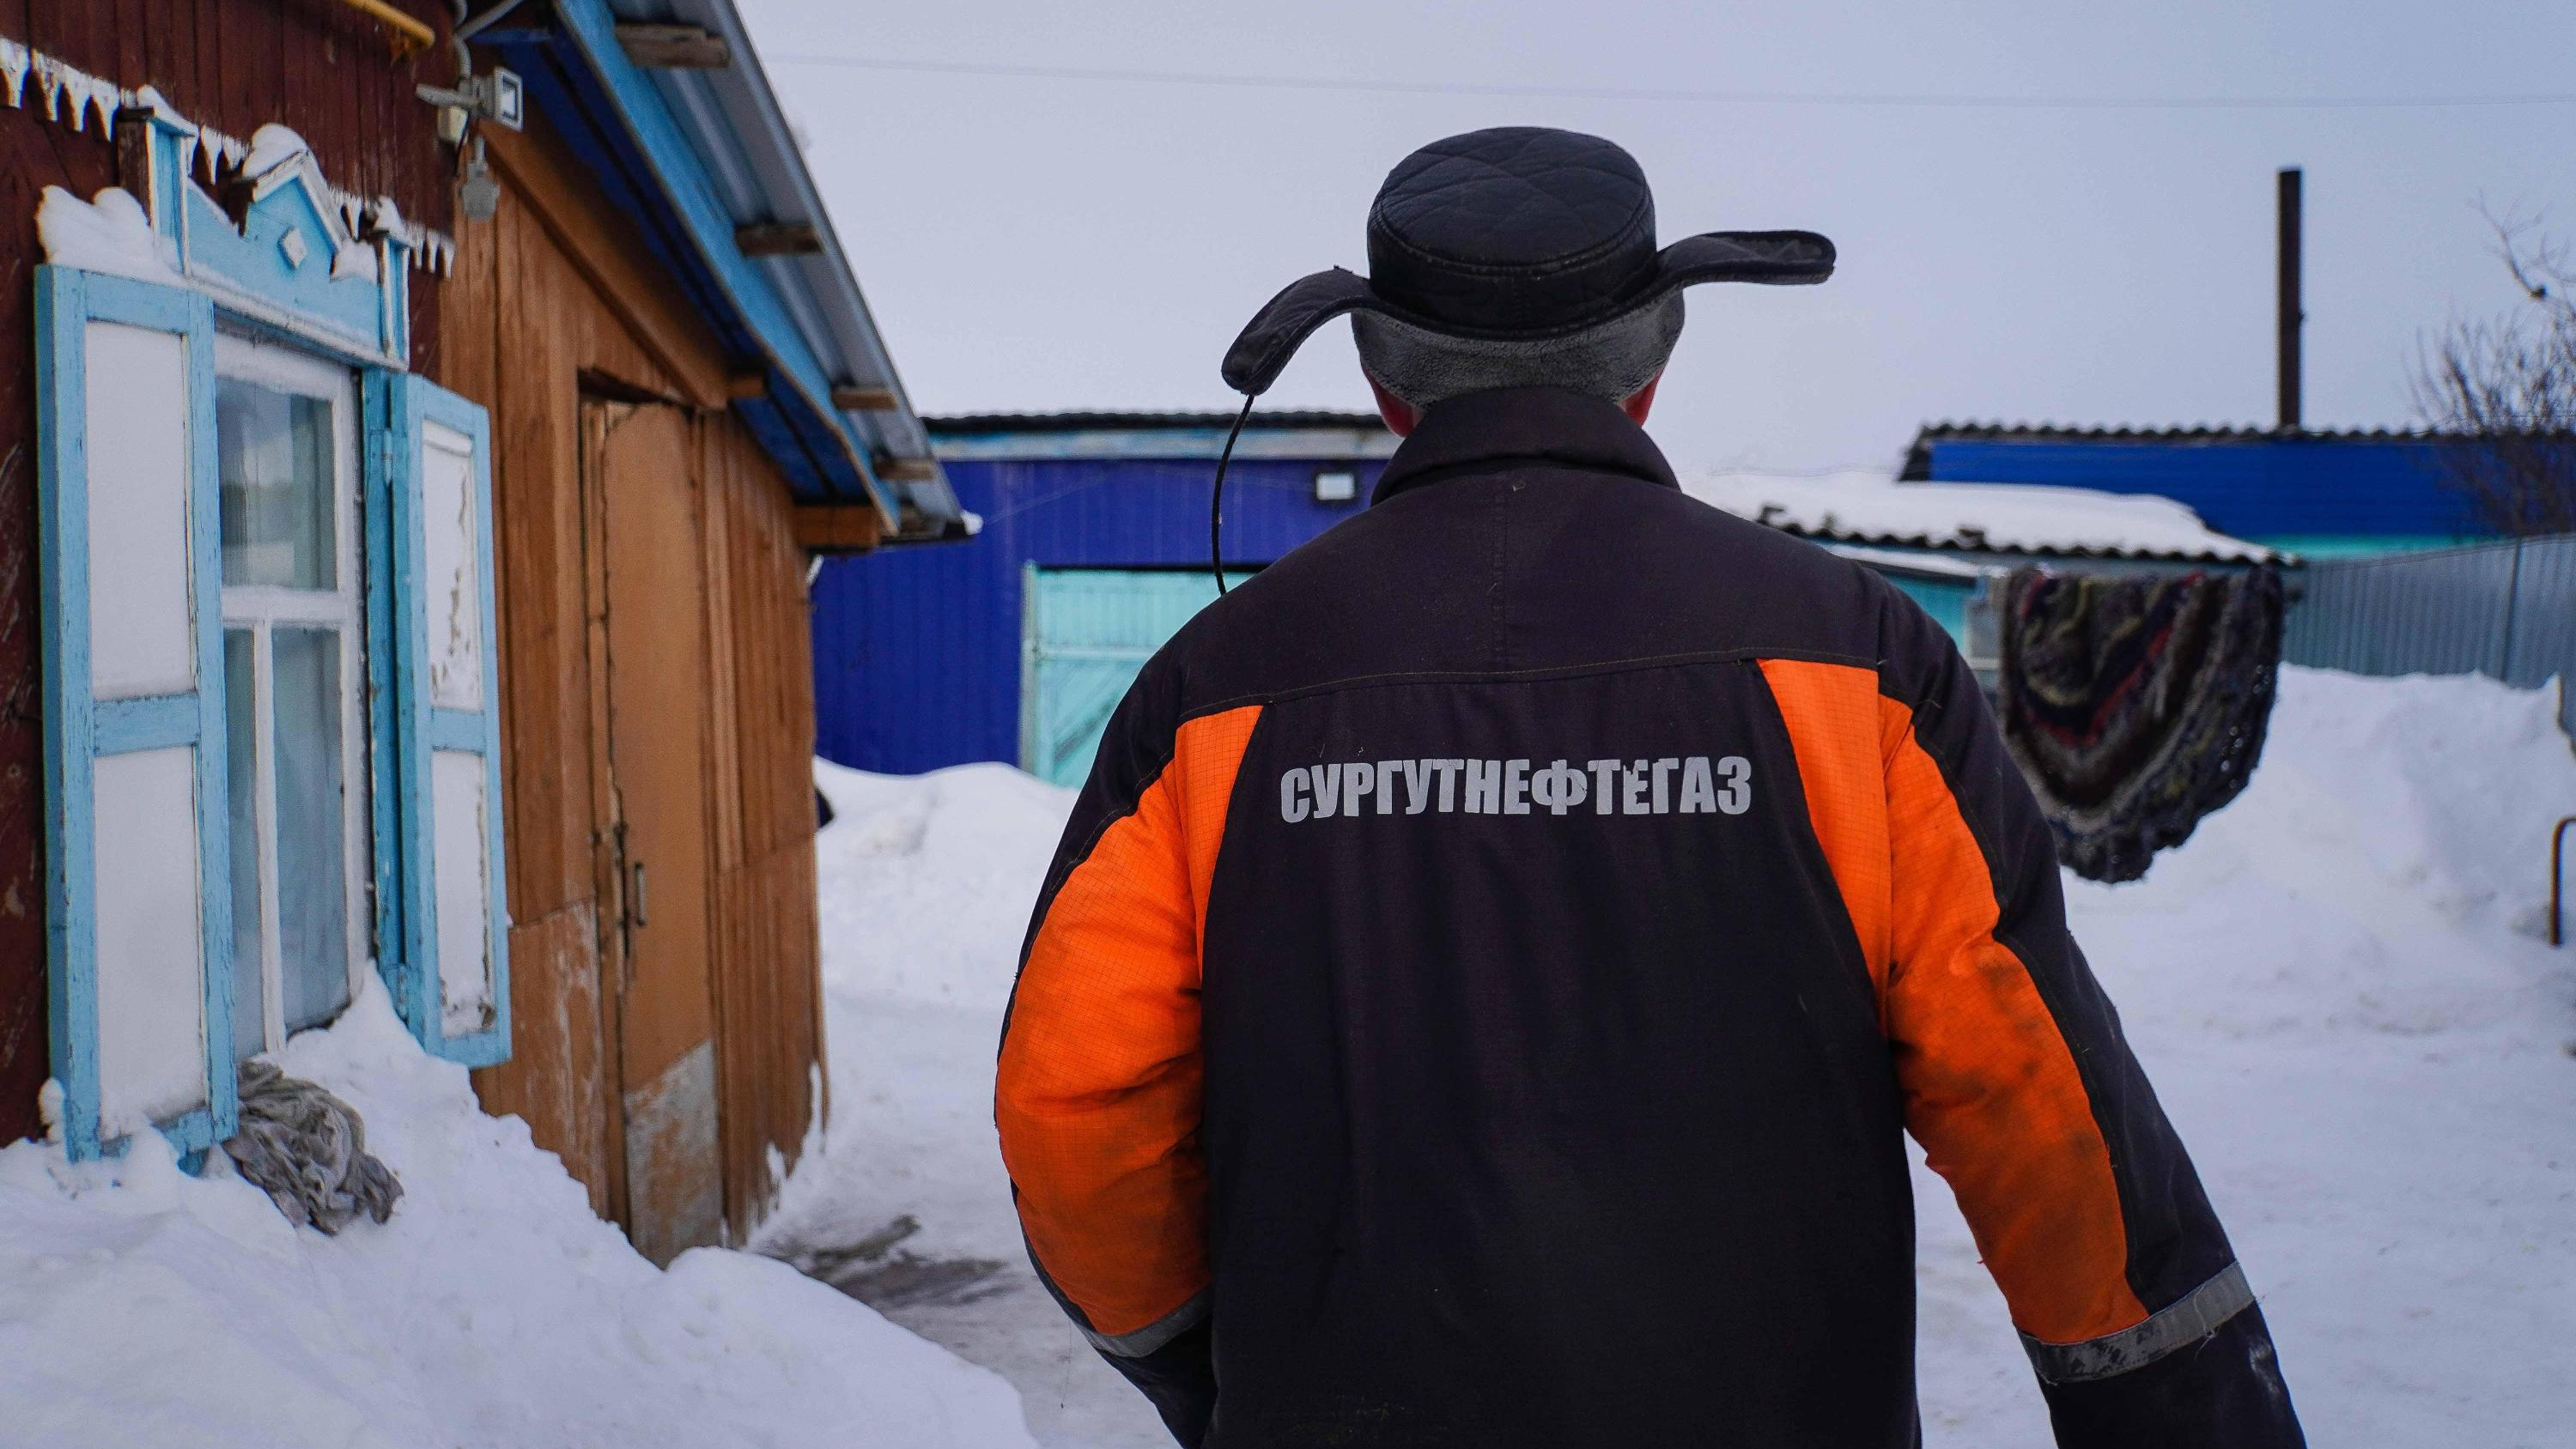 Нефтяники на два дня застряли без связи в якутской тайге. Коллеги про них забыли